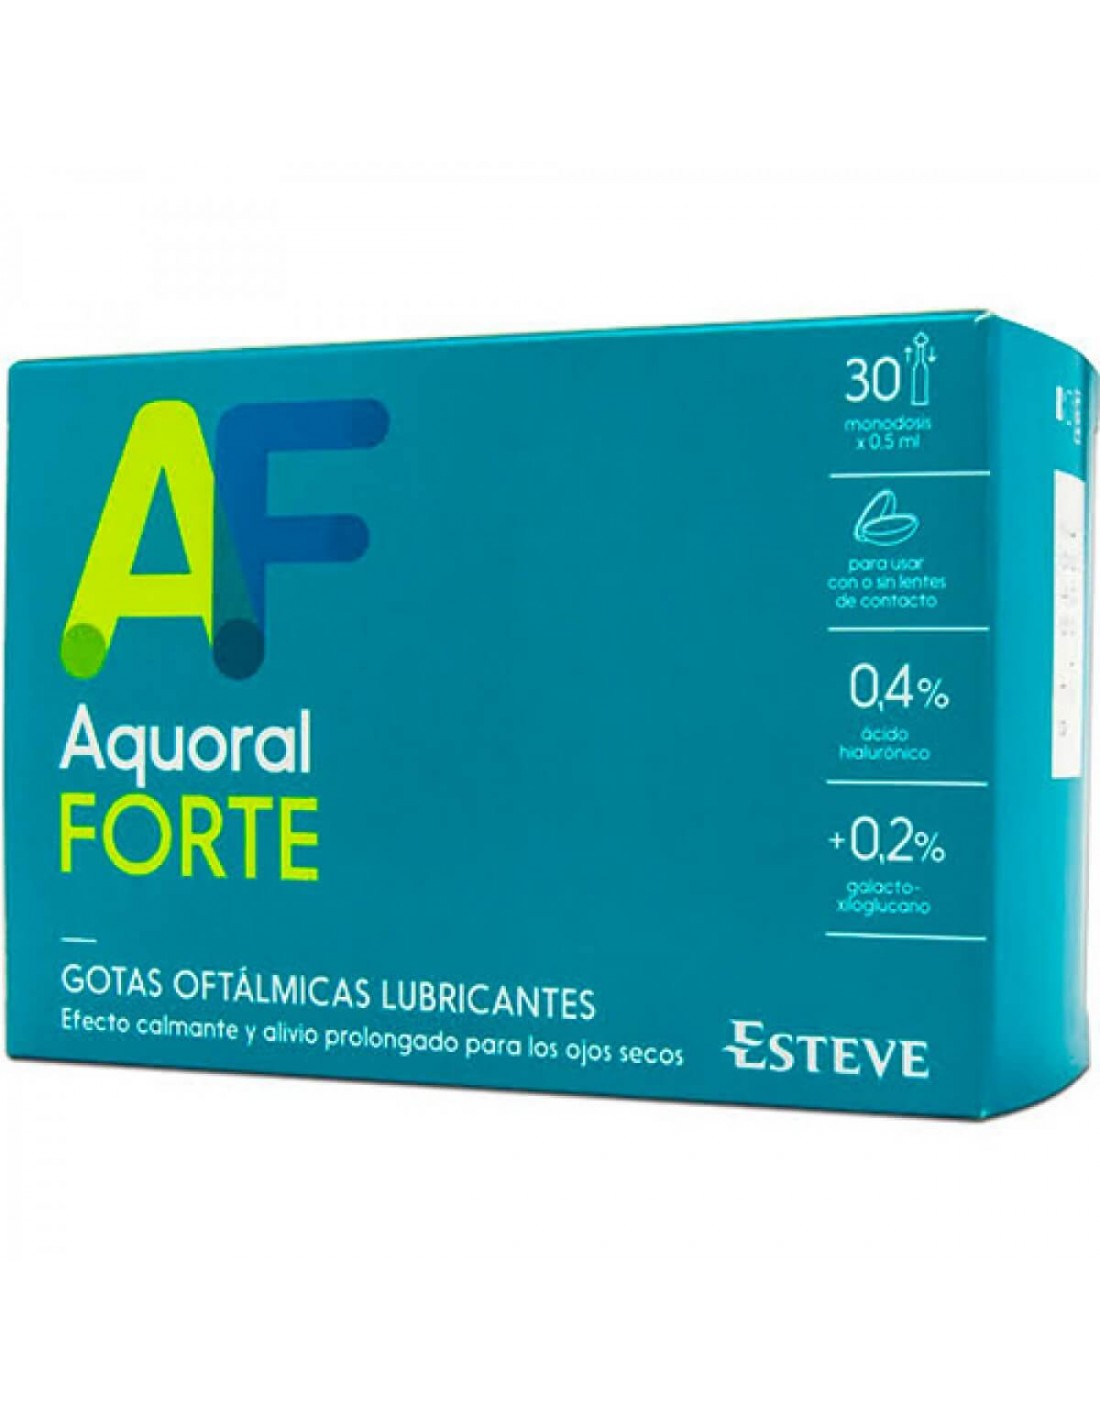 Aquoral Forte Multidosis Gotas Oftálmicas Lubricantes 10ml